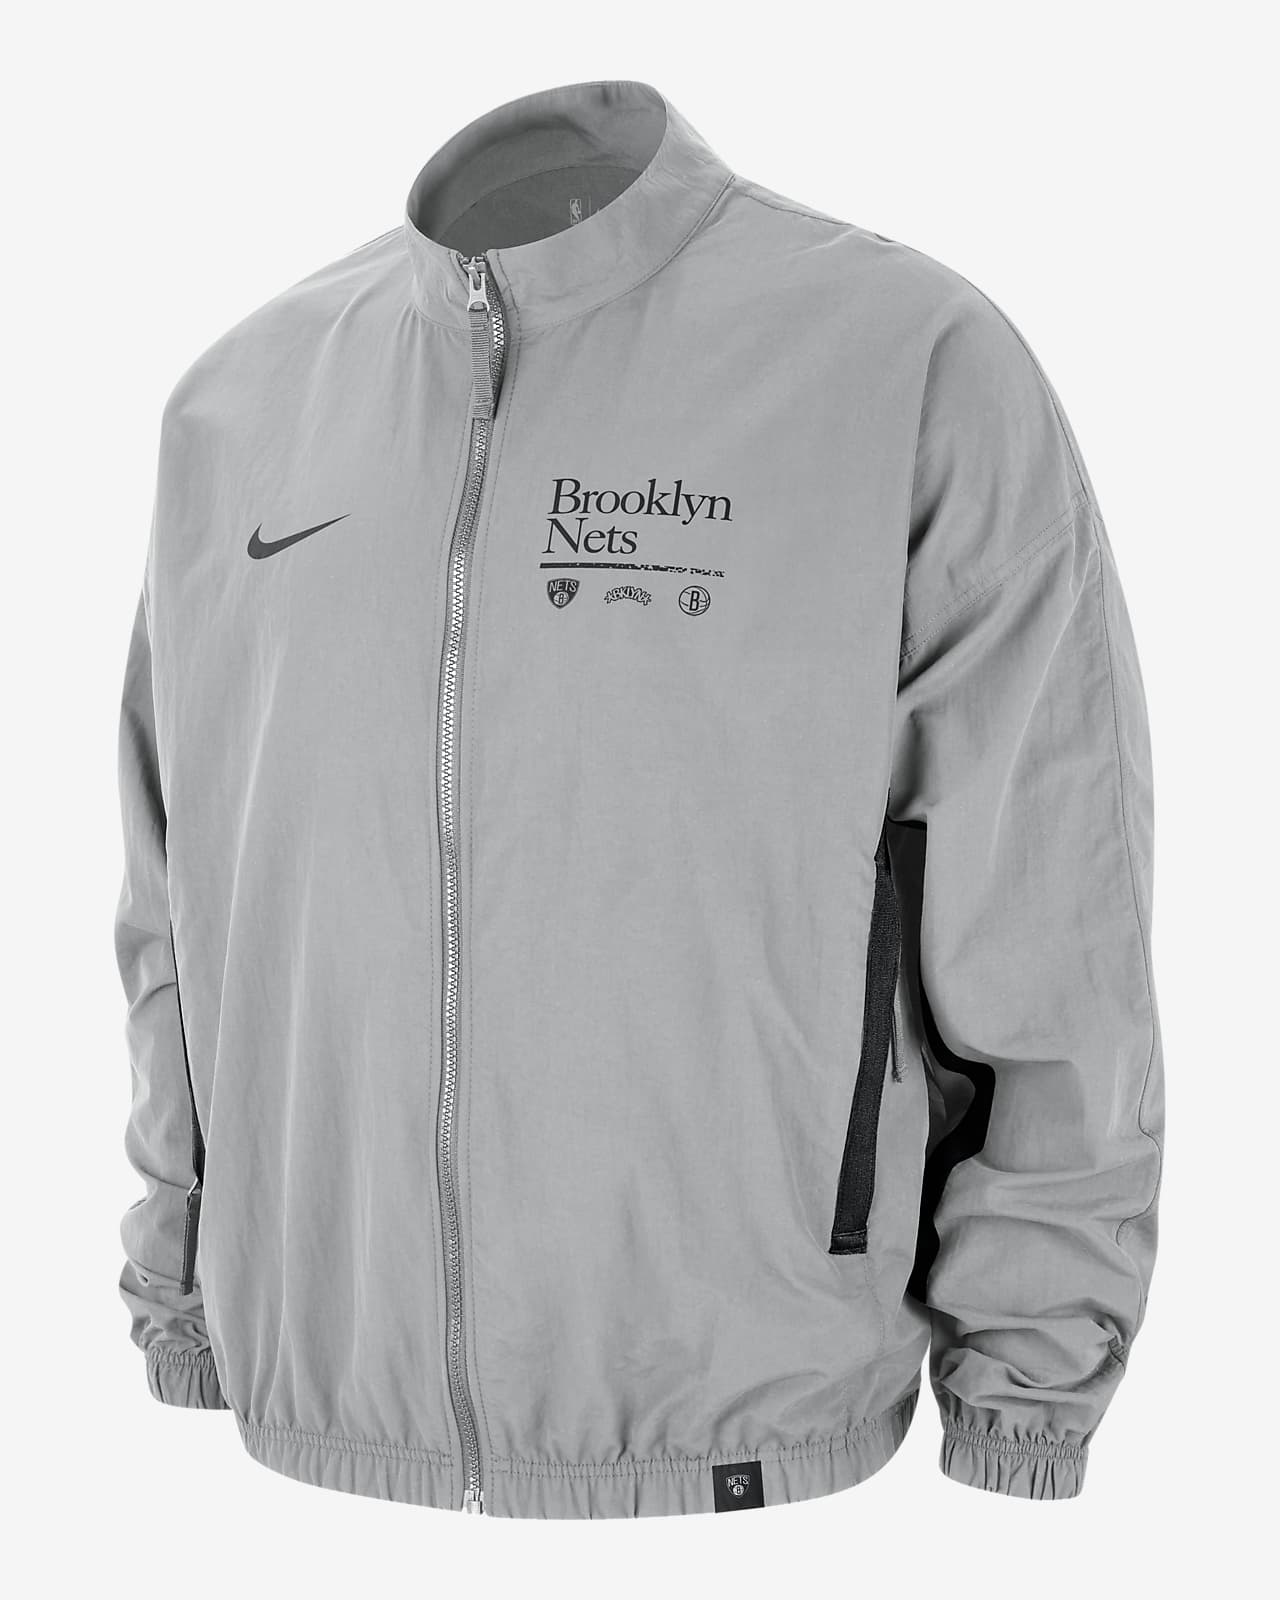 Brooklyn Nets DNA Courtside Men's Nike NBA Woven Graphic Jacket